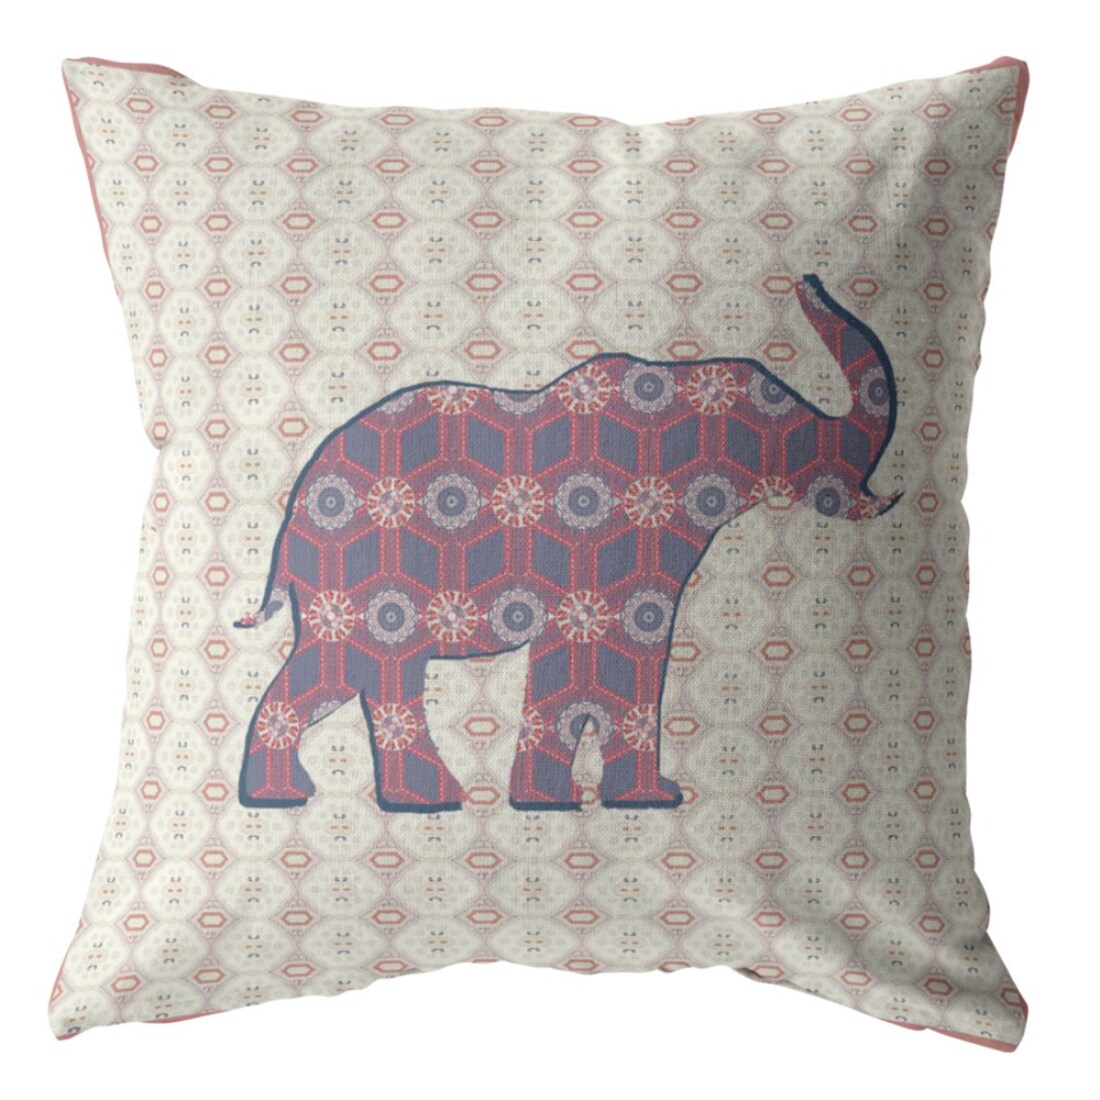 HomeRoots 20 inc Magenta Elephant Decorative Suede Throw Pillow in